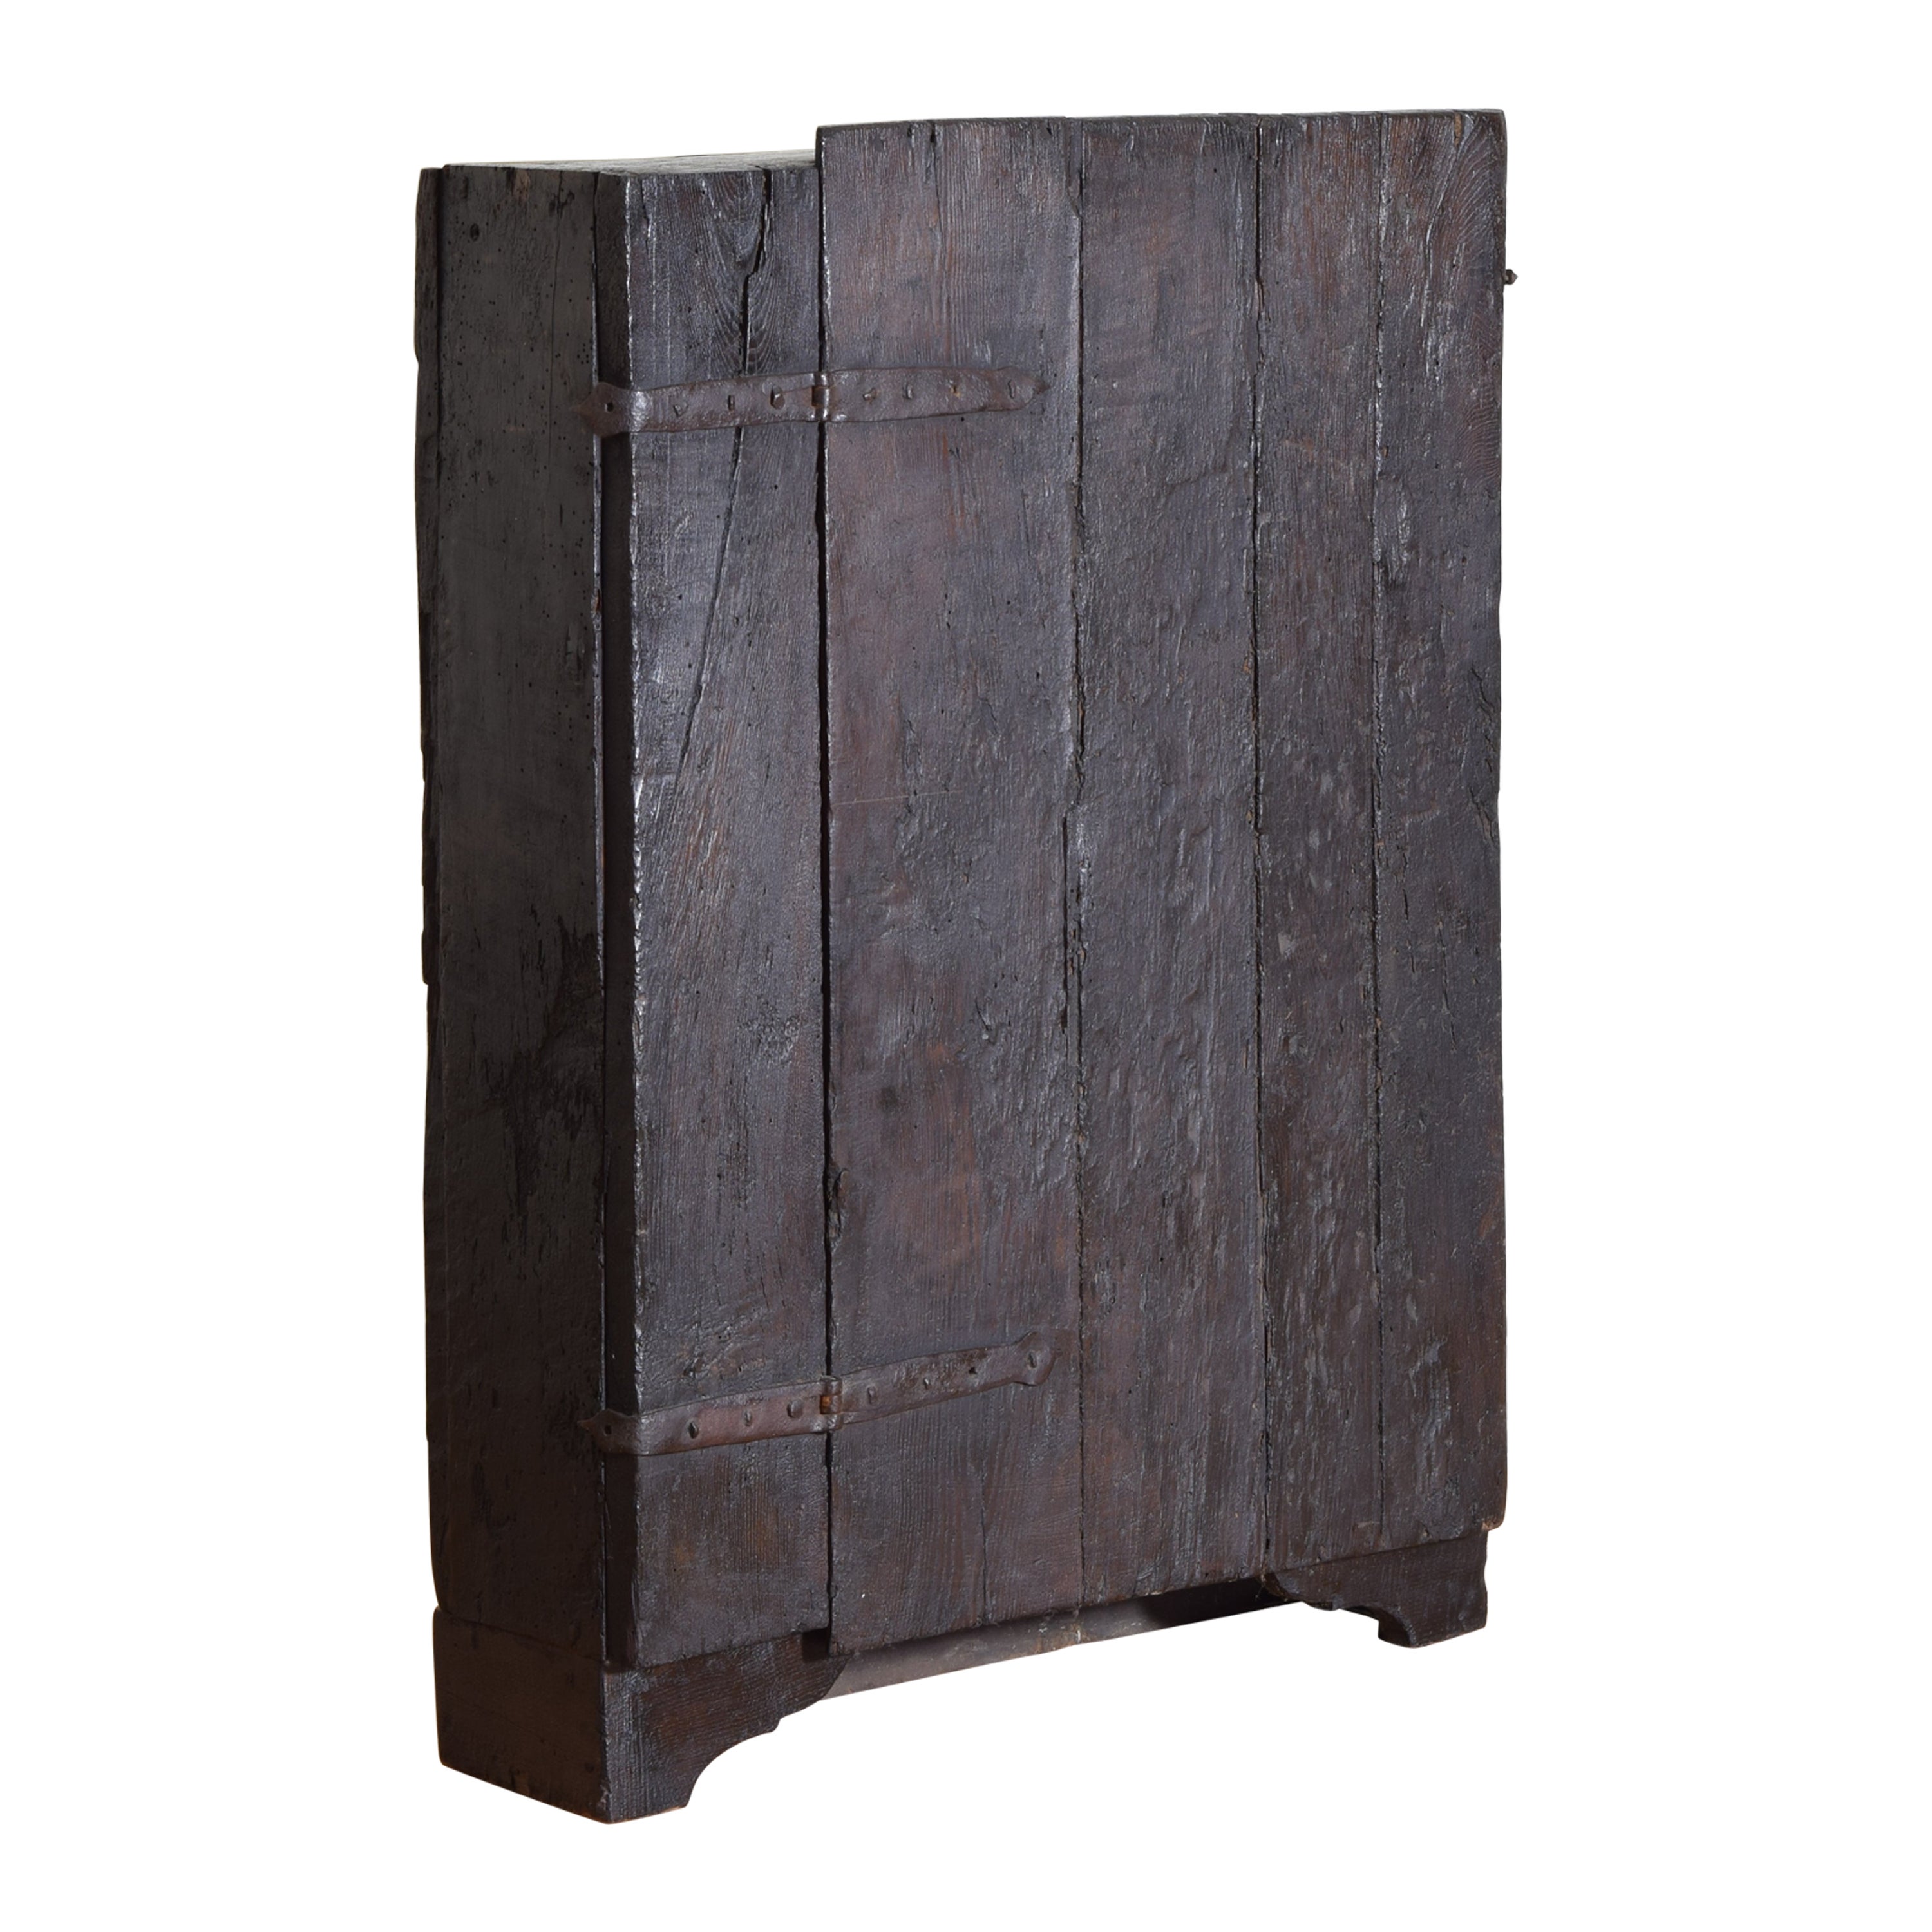 Italian Late Baroque Ebonized Oak 1-Door Footed Cabinet, early 18th cen. & later